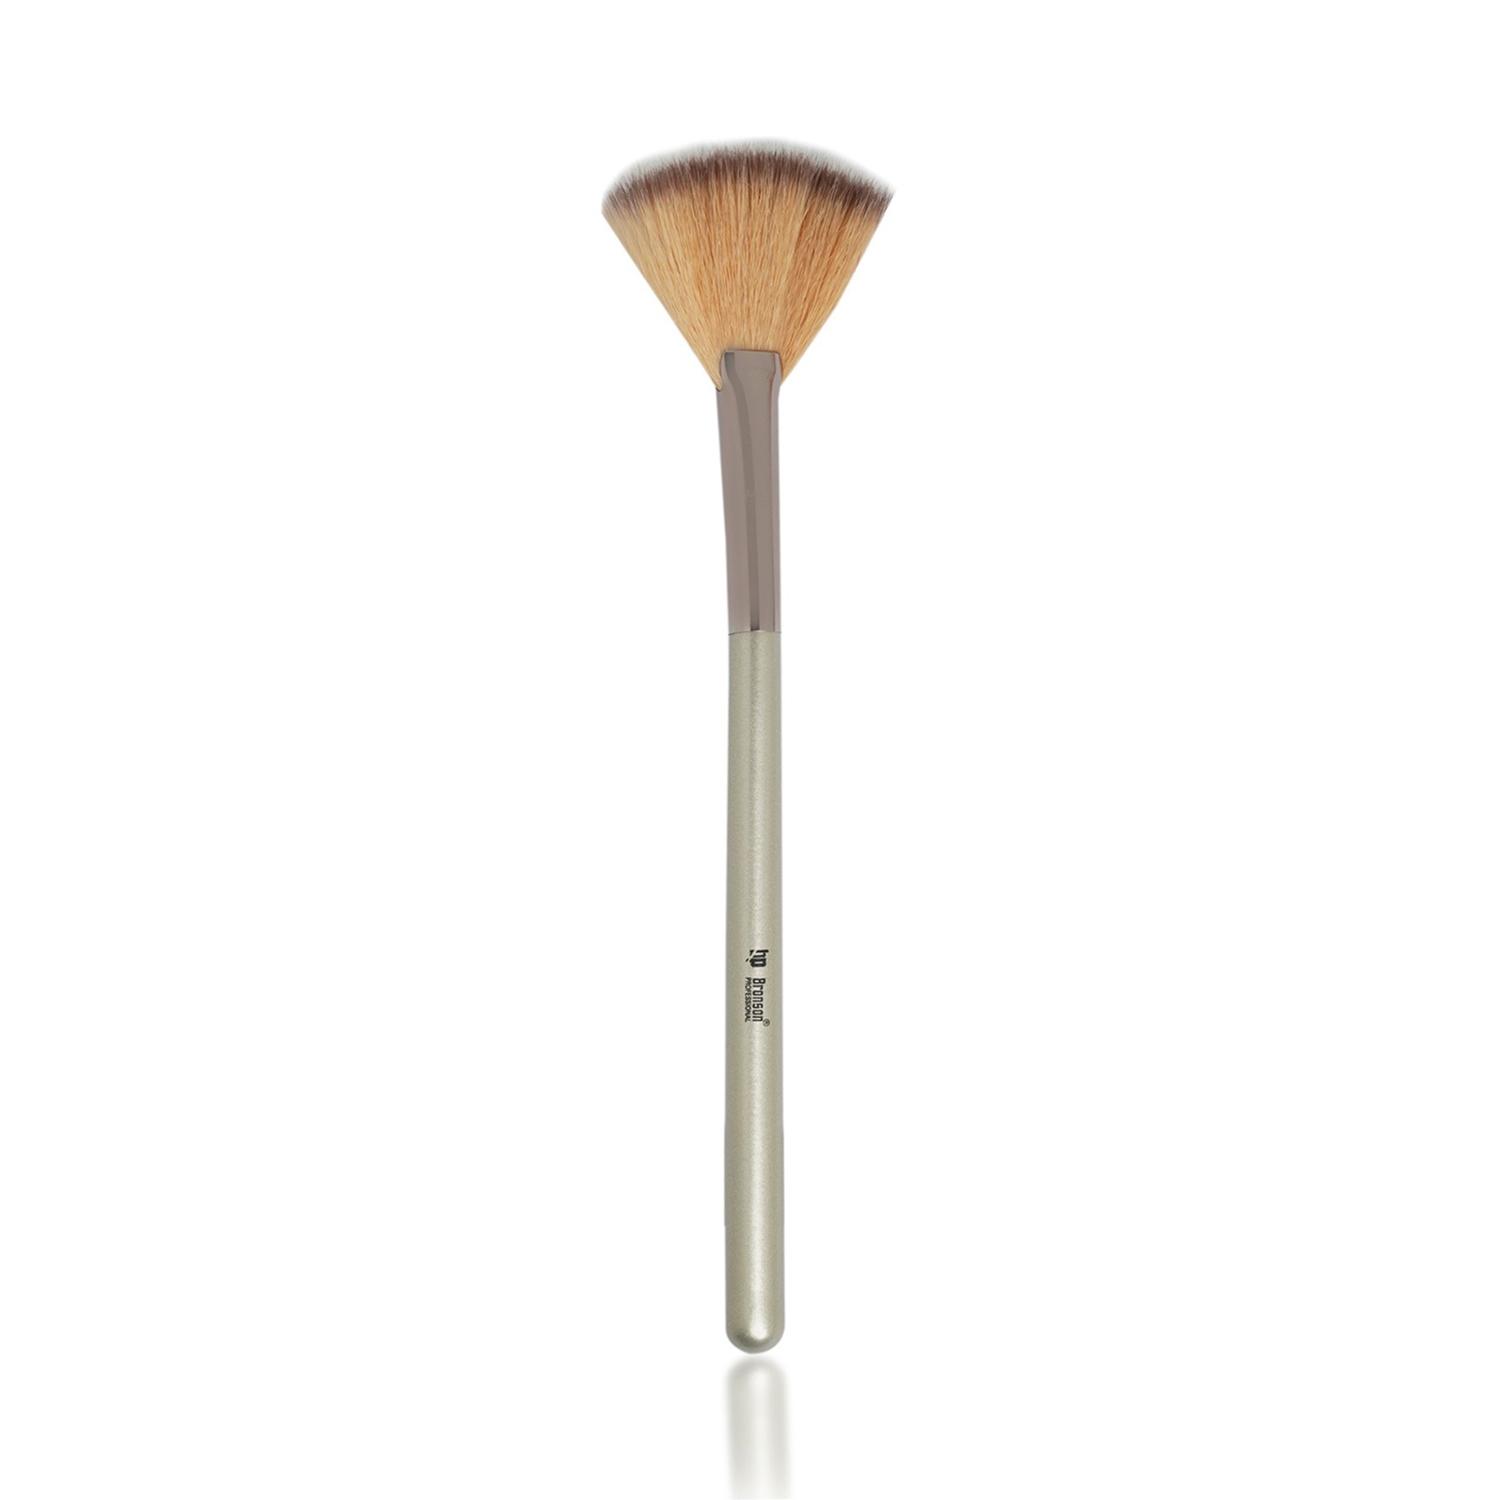 Bronson Professional | Bronson Professional Classic Fan Makeup Brush - Silver, Pink